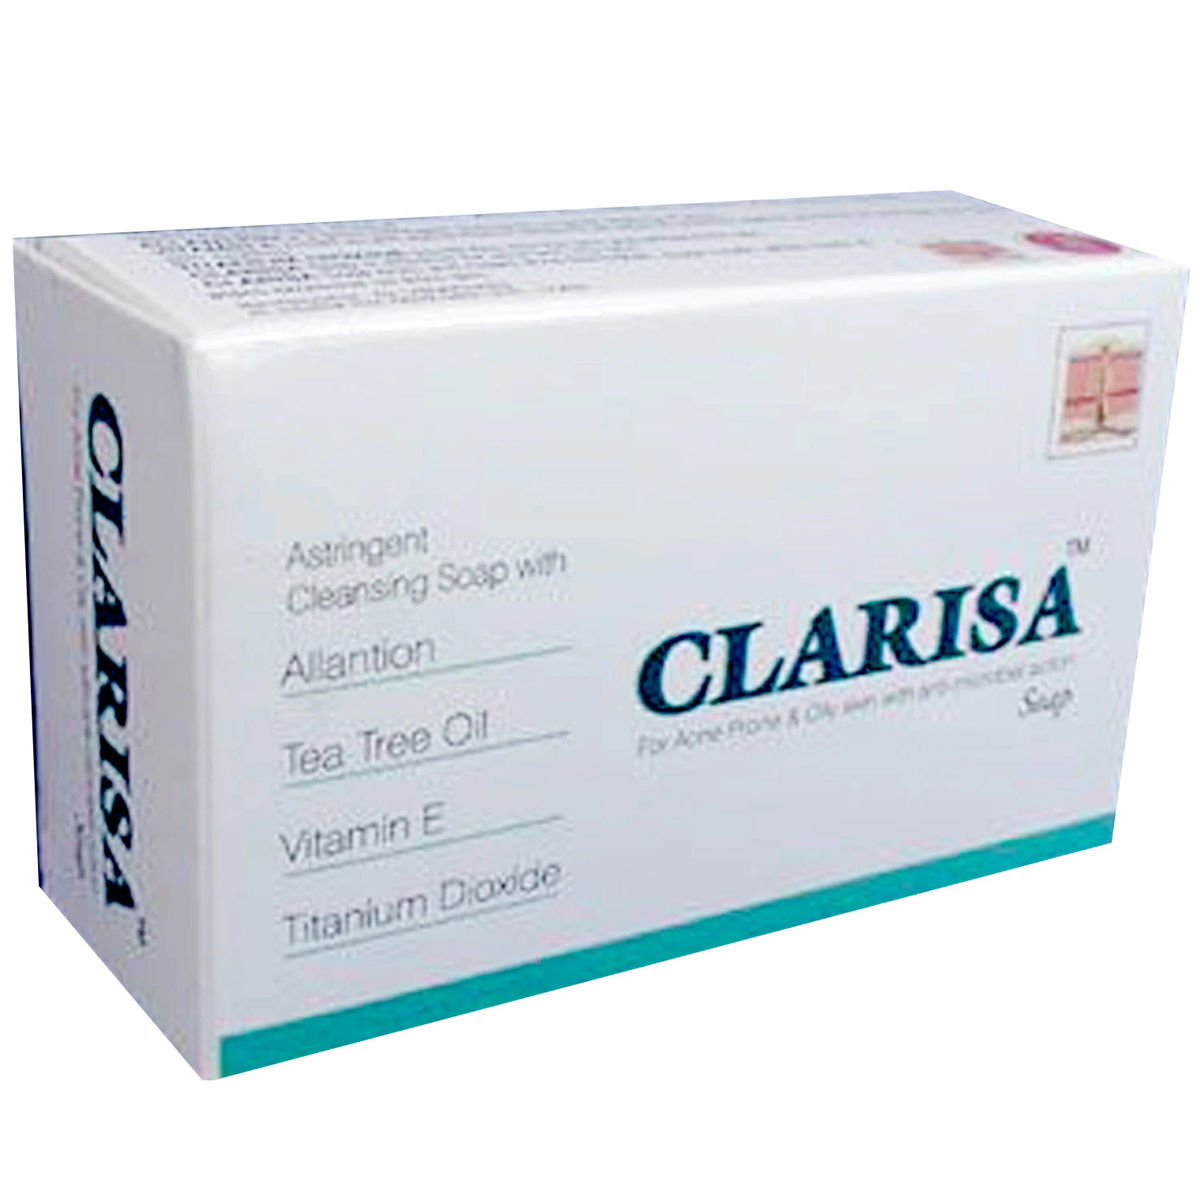 Clarisa Soap, 75 gm, Pack of 1 